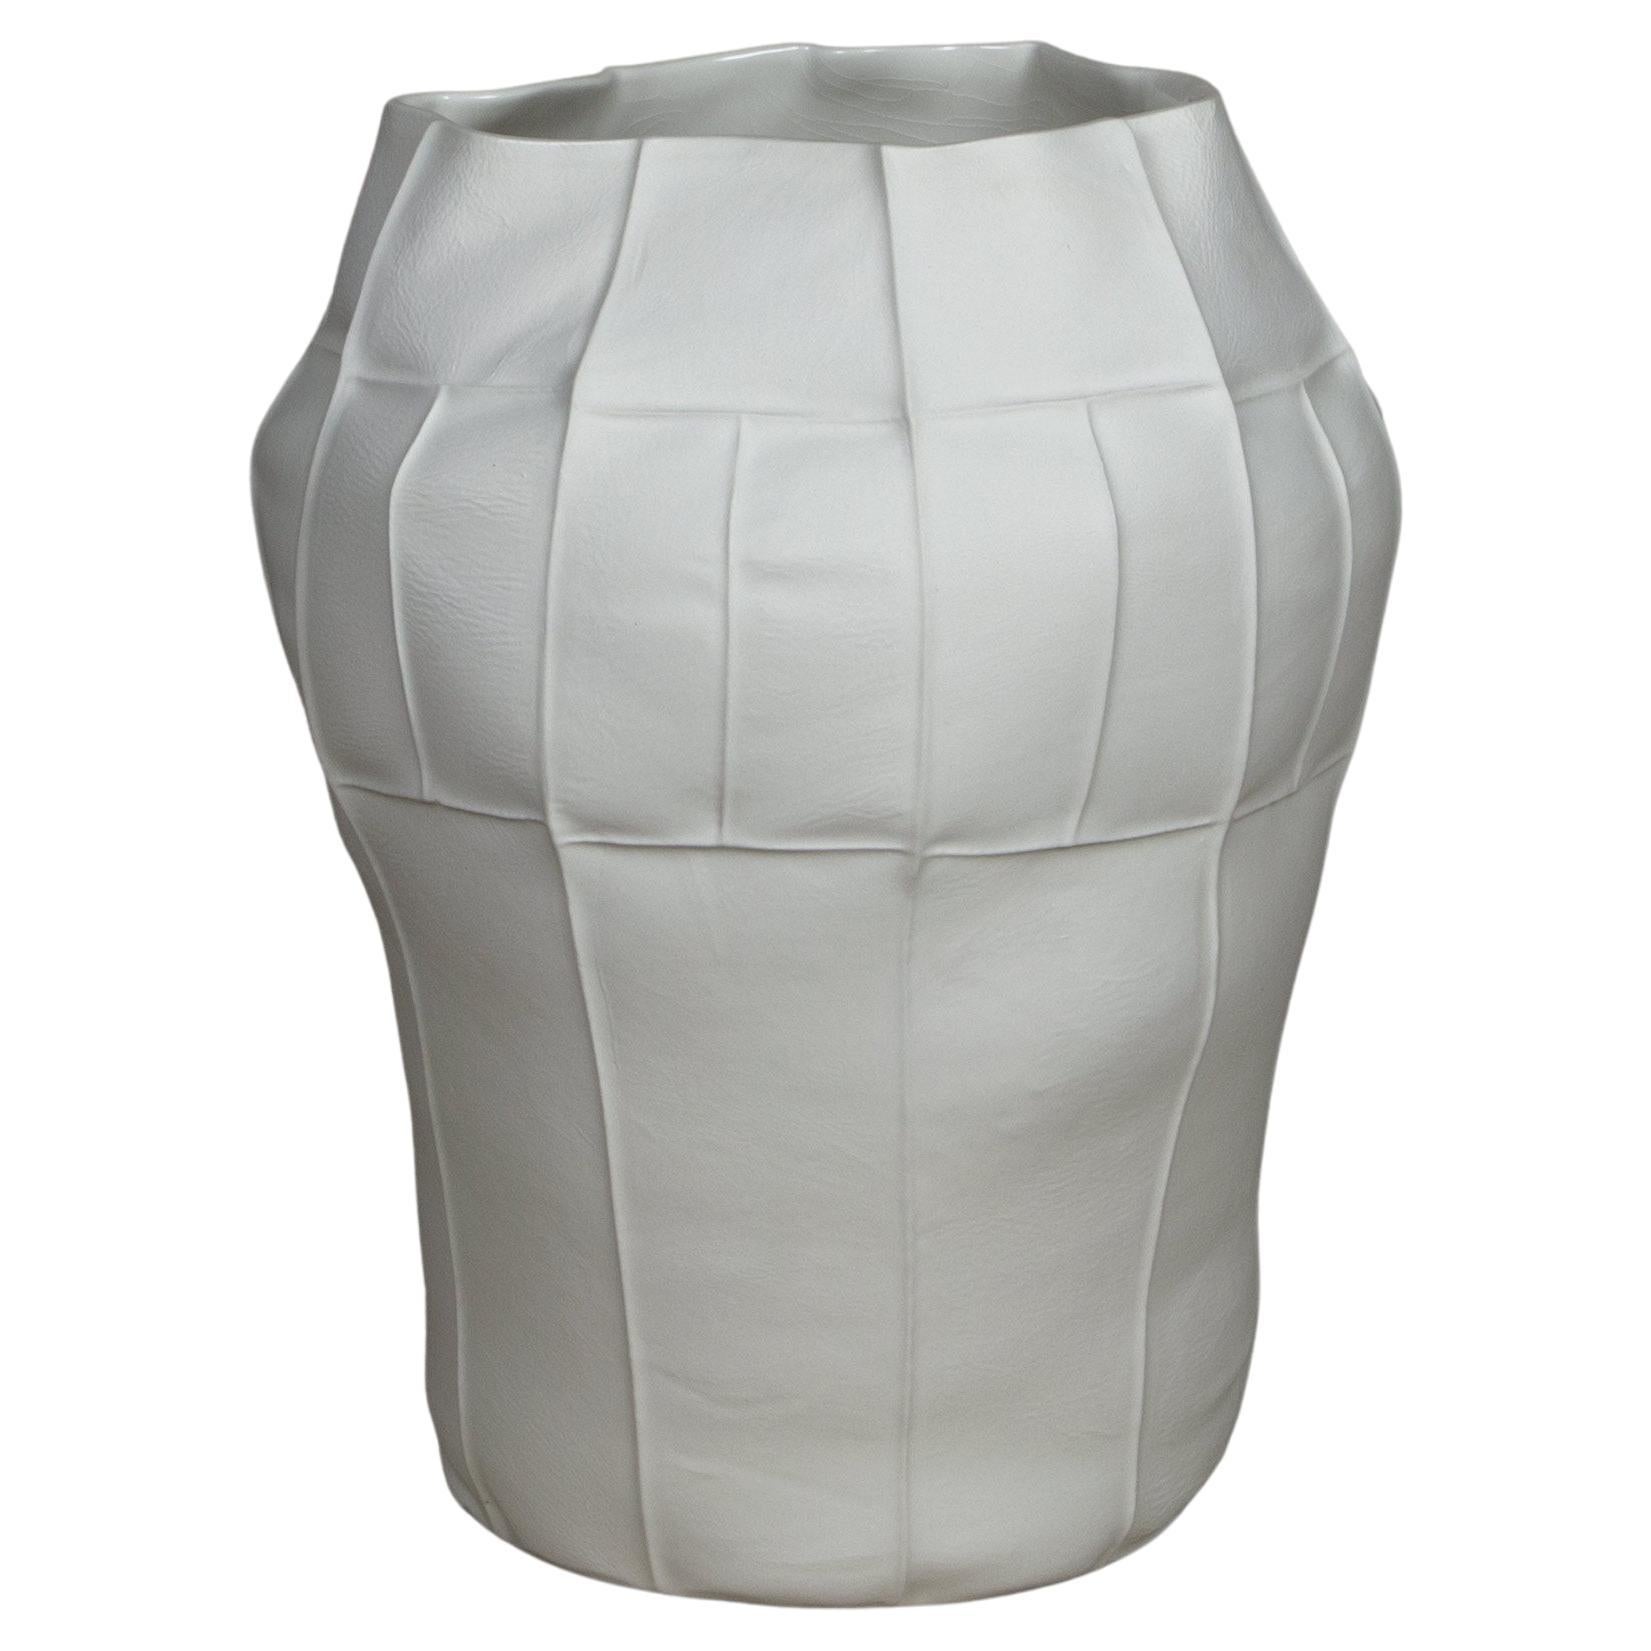 White Ceramic Kawa Vessel, Large 03, Leather Cast Porcelain Vase, Centerpiece